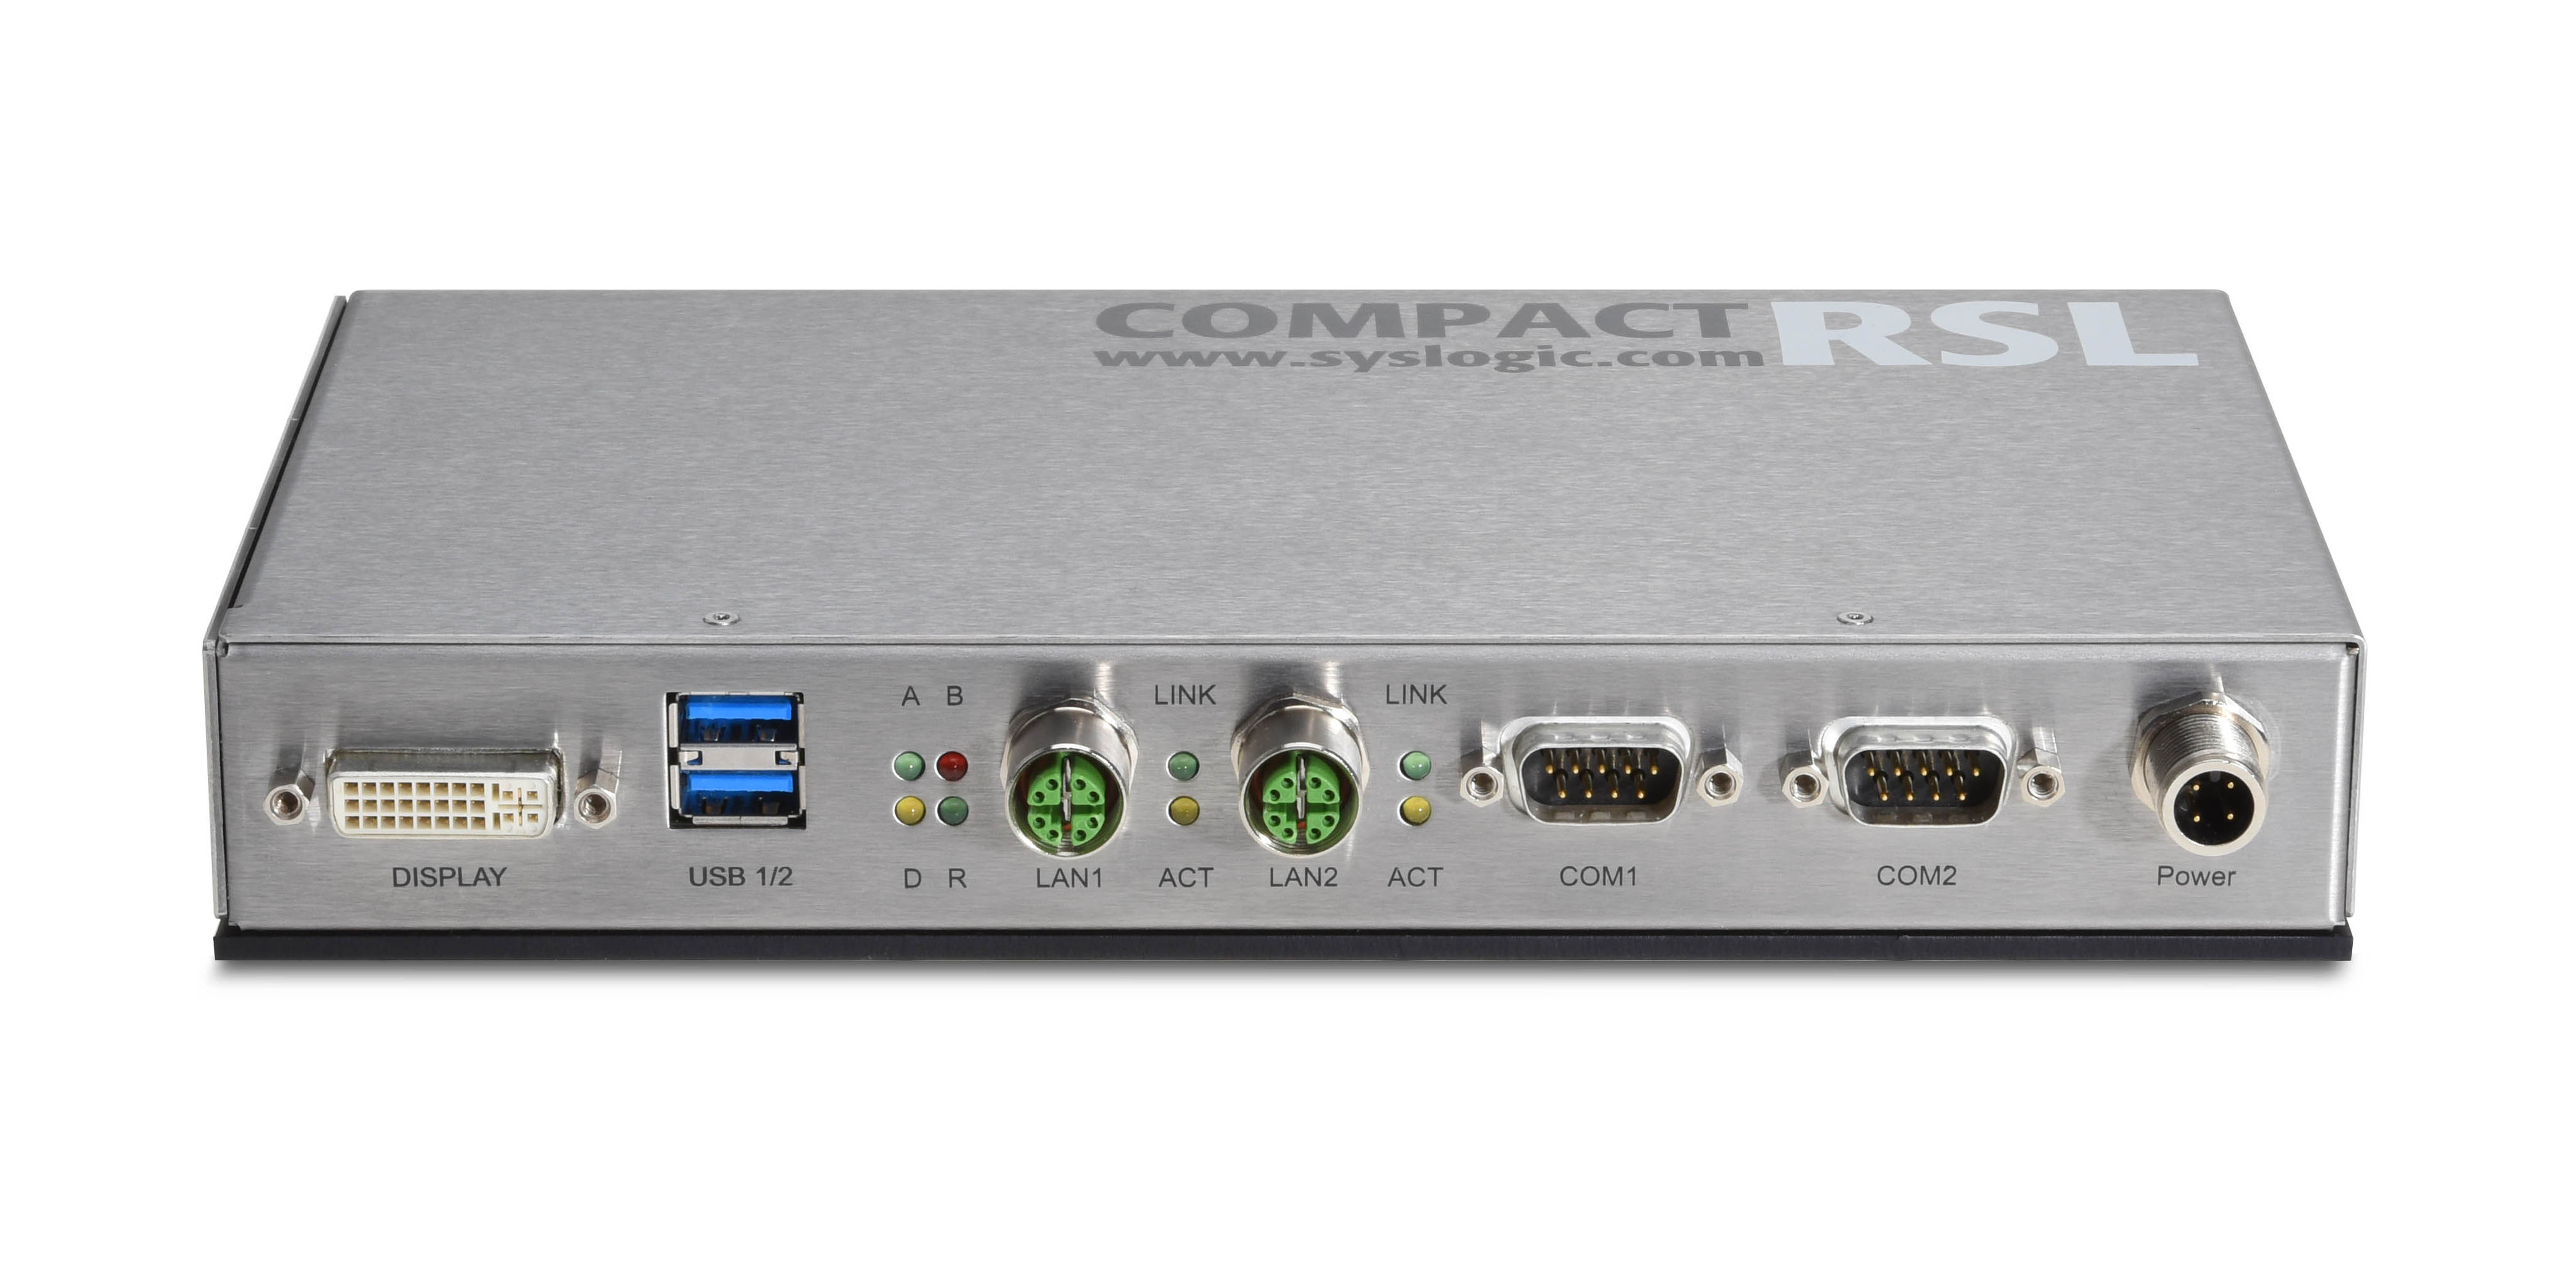 Railway Computer RSL-IPC/COMPACT8 - Syslogic